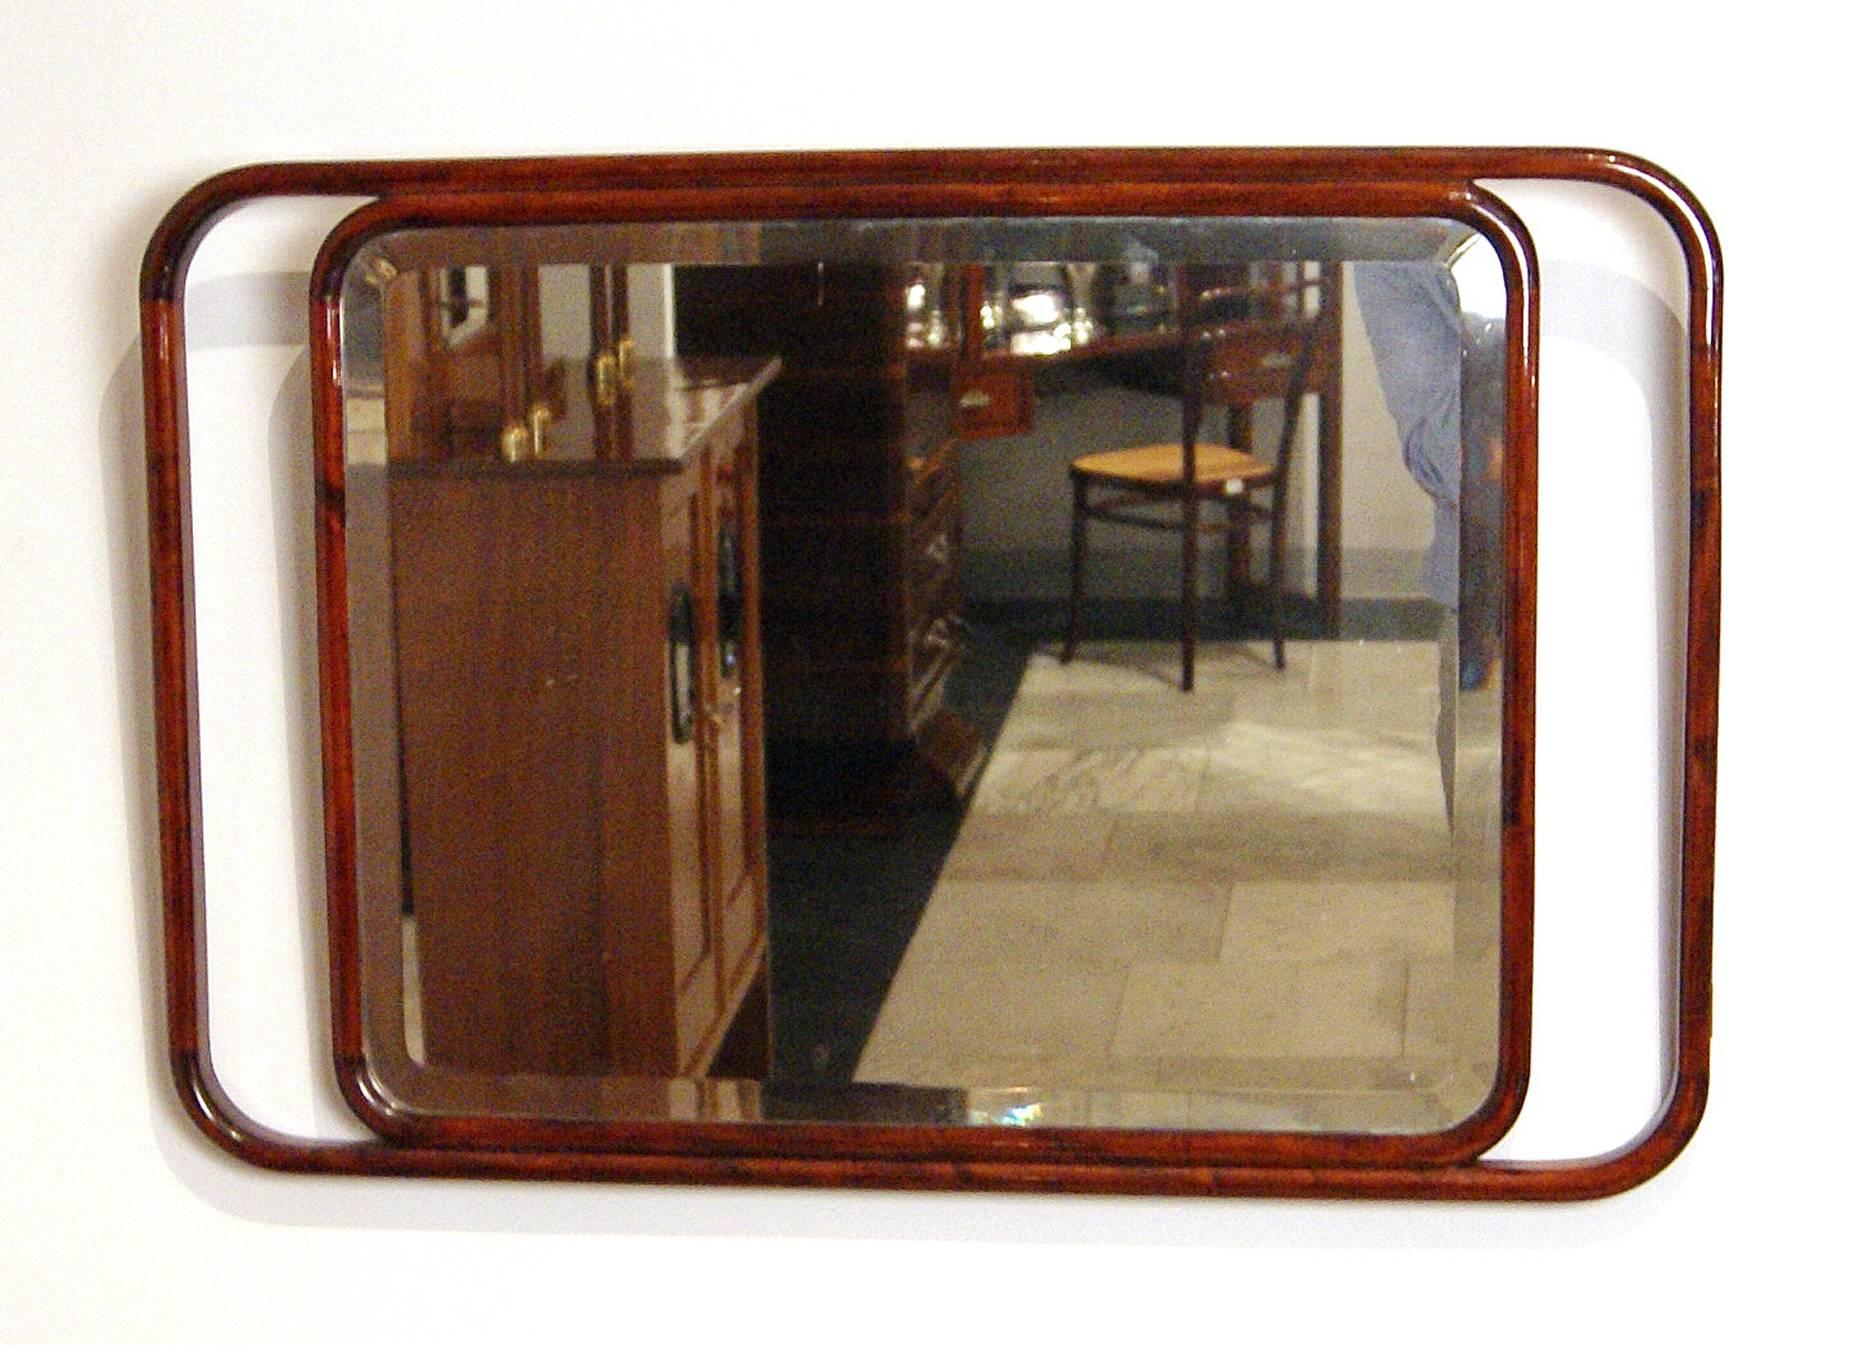 Art Nouveau wall mounted mirror
made circa 1905.

Manufactory:
Jacob & Josef Kohn / Vienna 
Model 1148 

Beech wood (bentwood furniture), dark mahogany stained, refurbished by hand. 
Rectangular elegant mirror having duplicate edge and